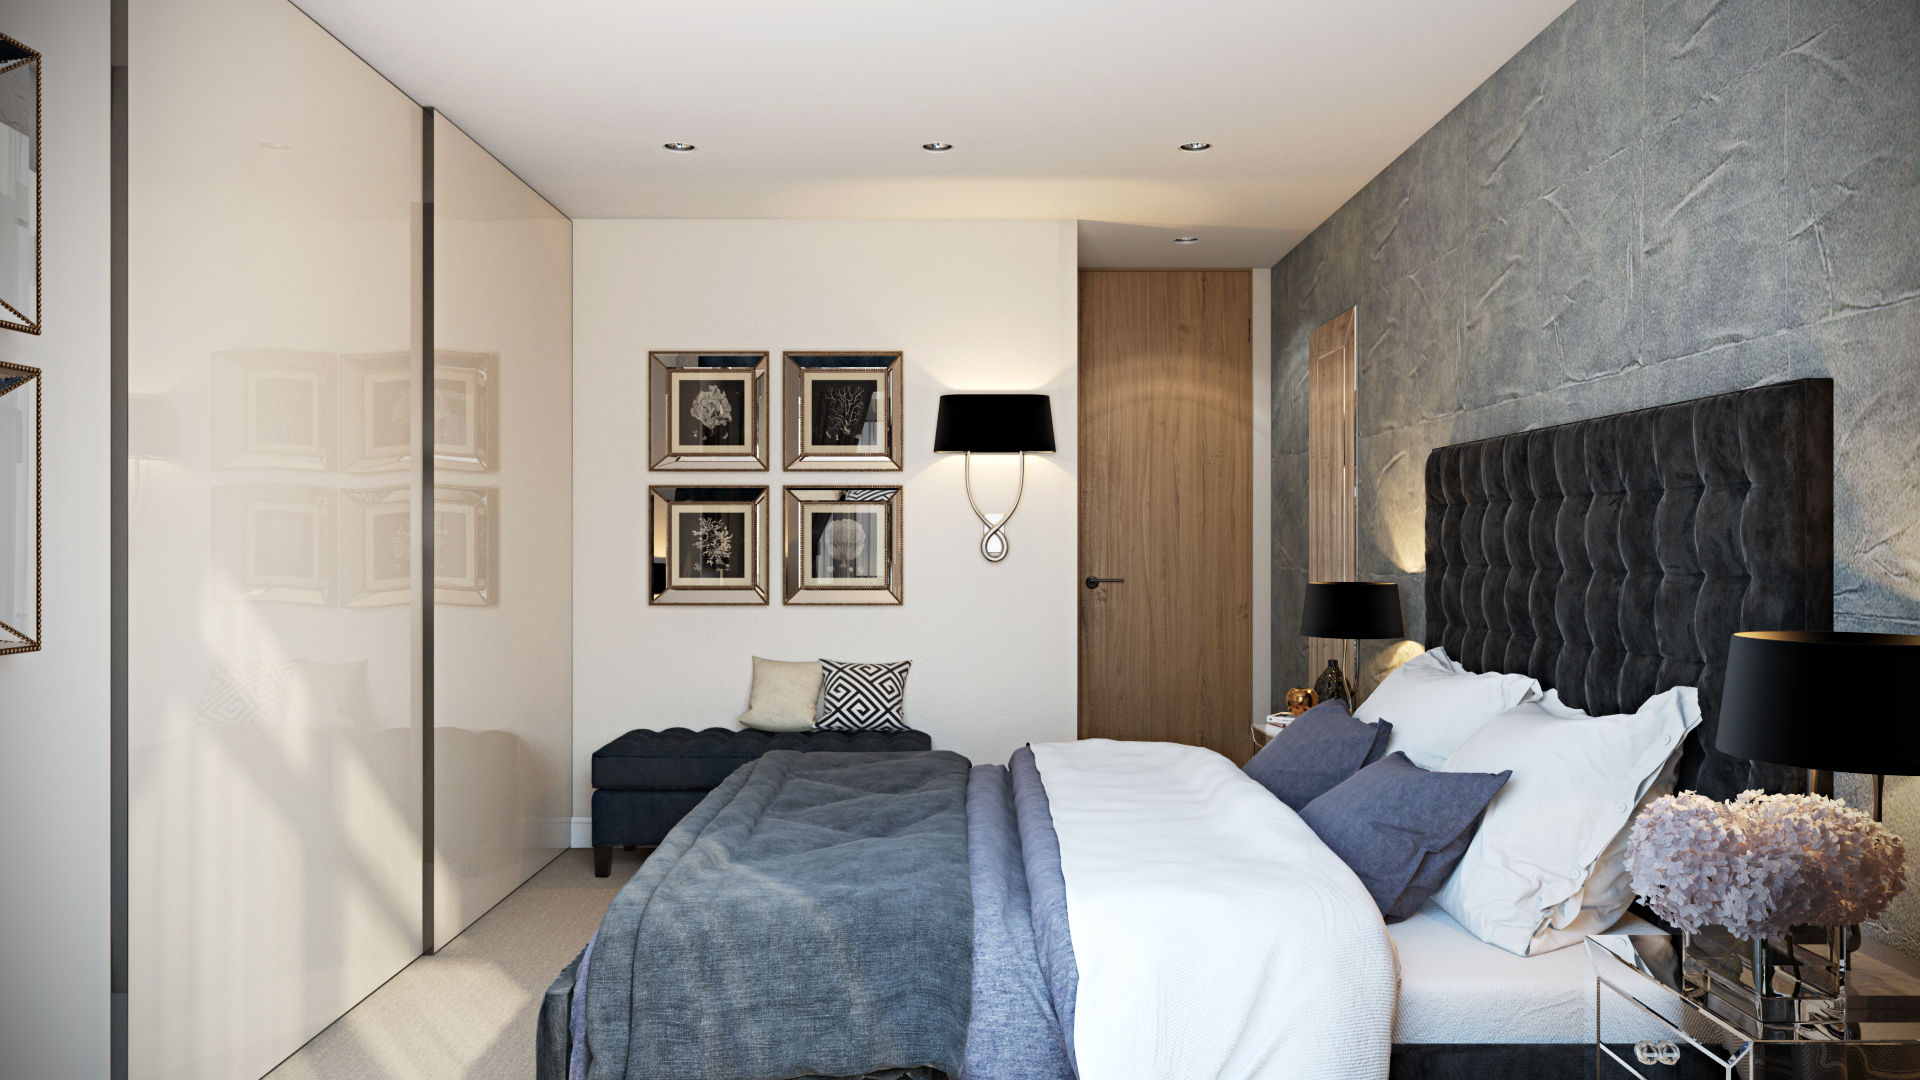 Bedroom Hampstead Design Hub Cuartos de estilo moderno wall colours,wall art,bed,built-in storage,wardrobe,wall lighting